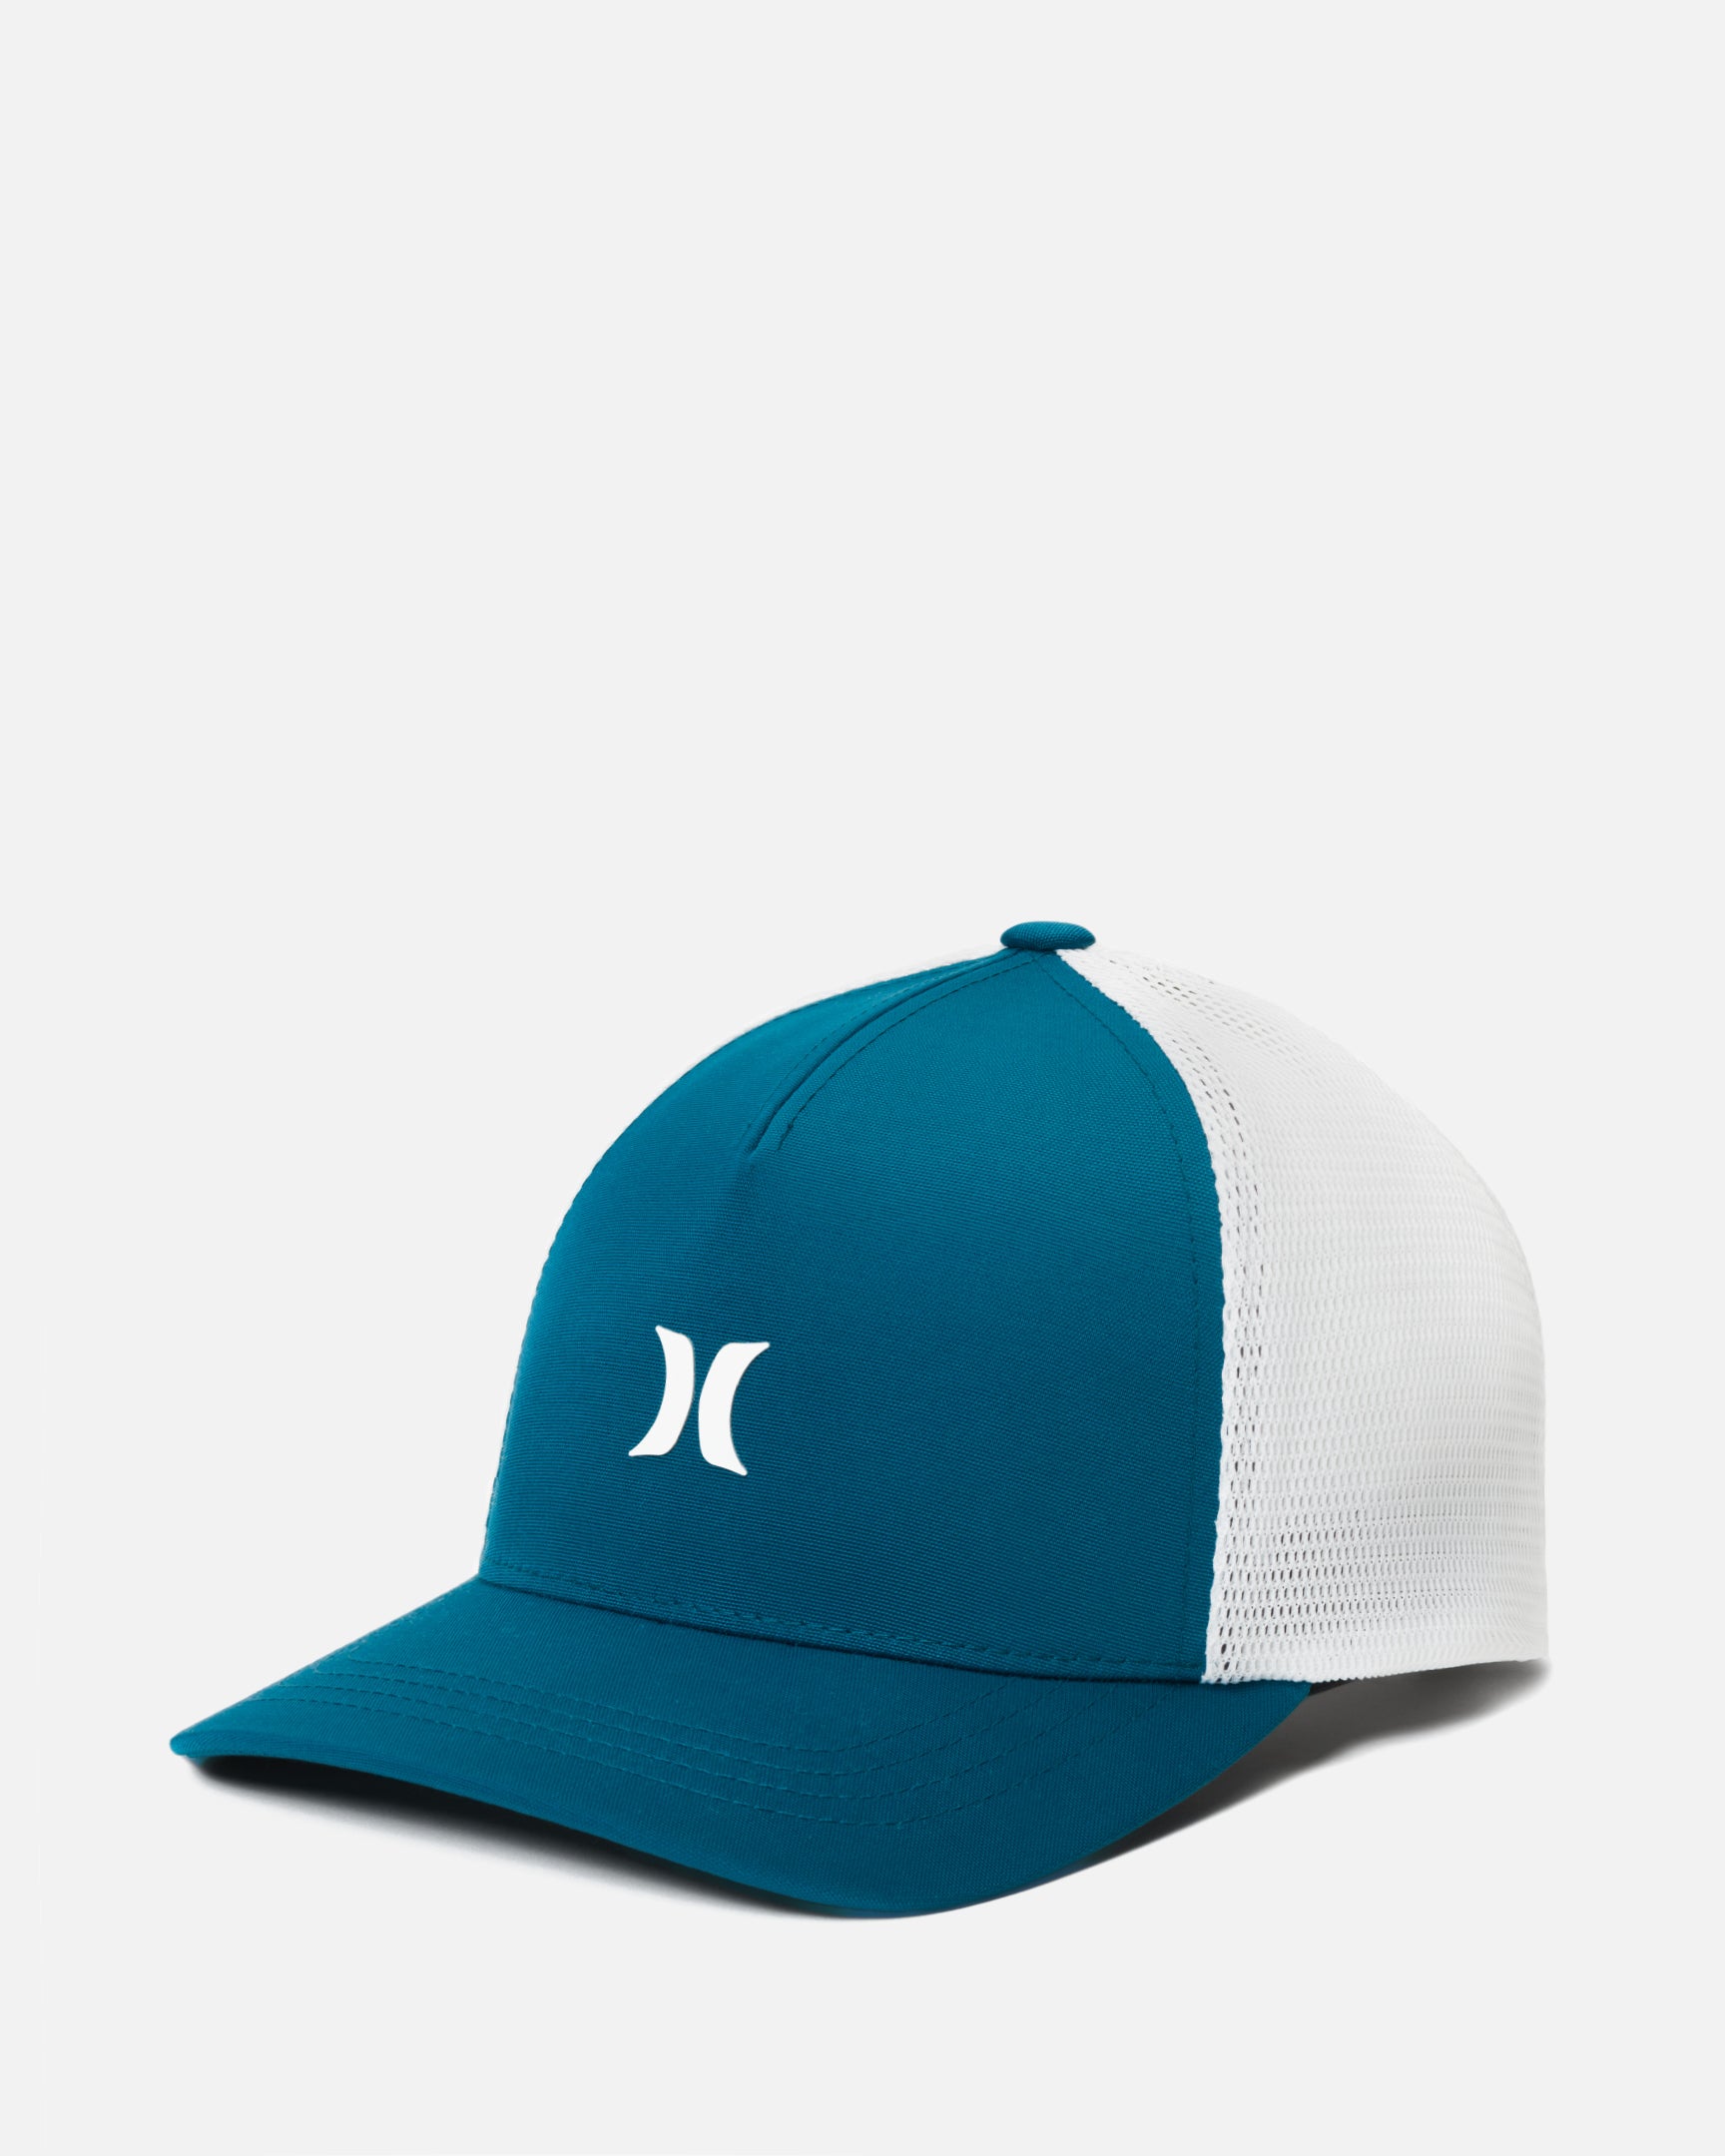 Women's Montara Hat in Racer Blue, Size OS